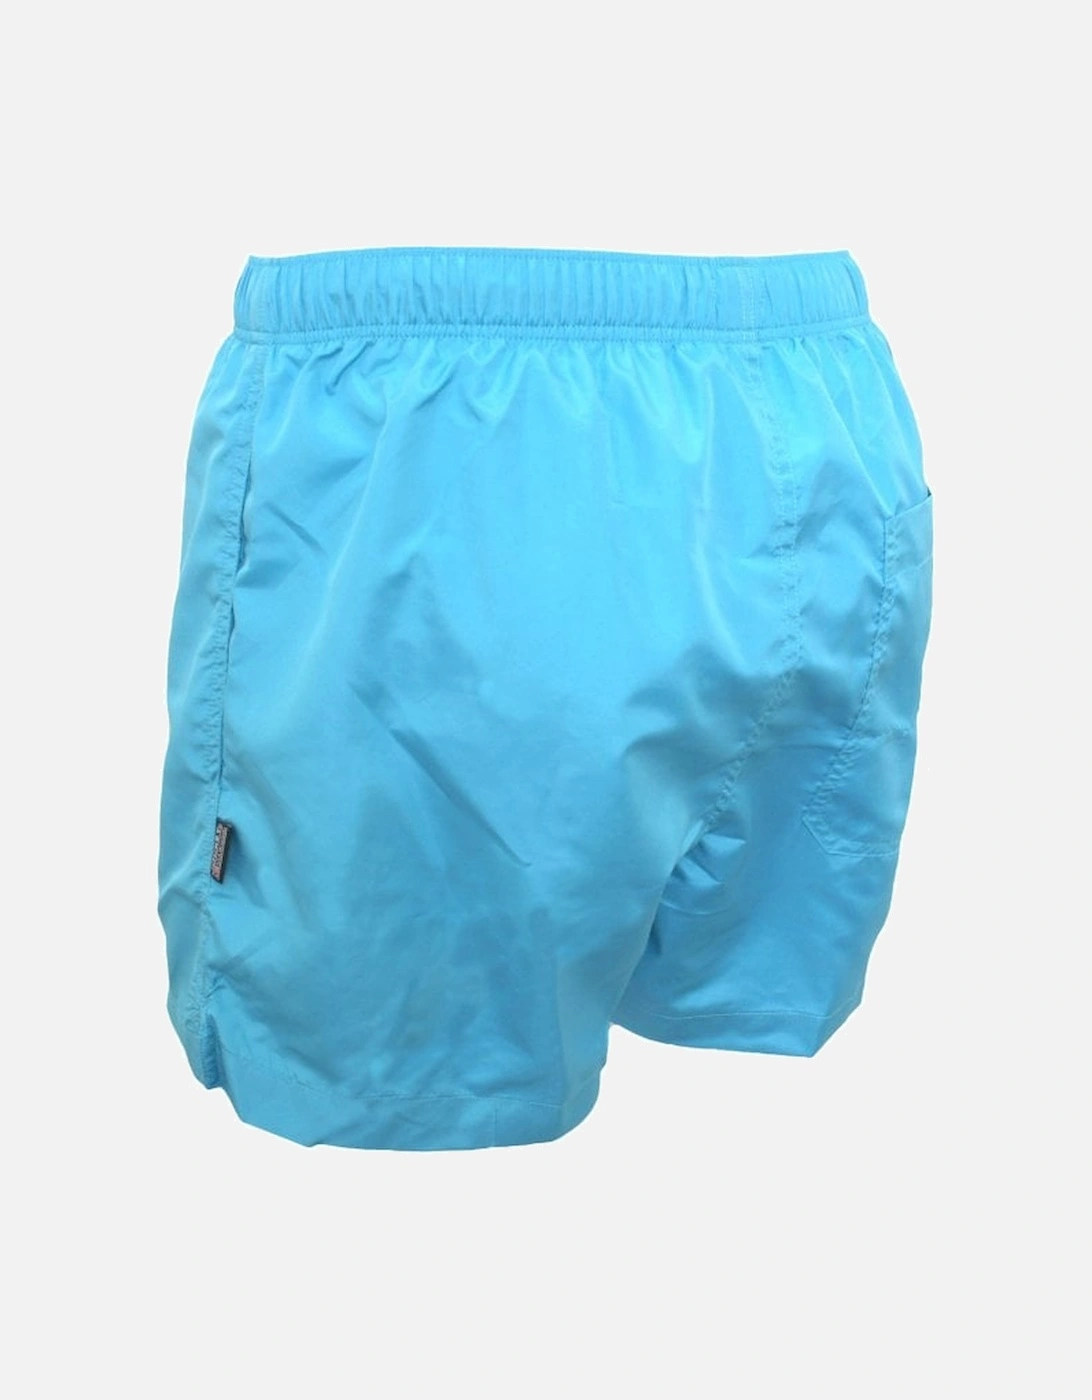 Classic Beach Swim Shorts, Bluebird Blue